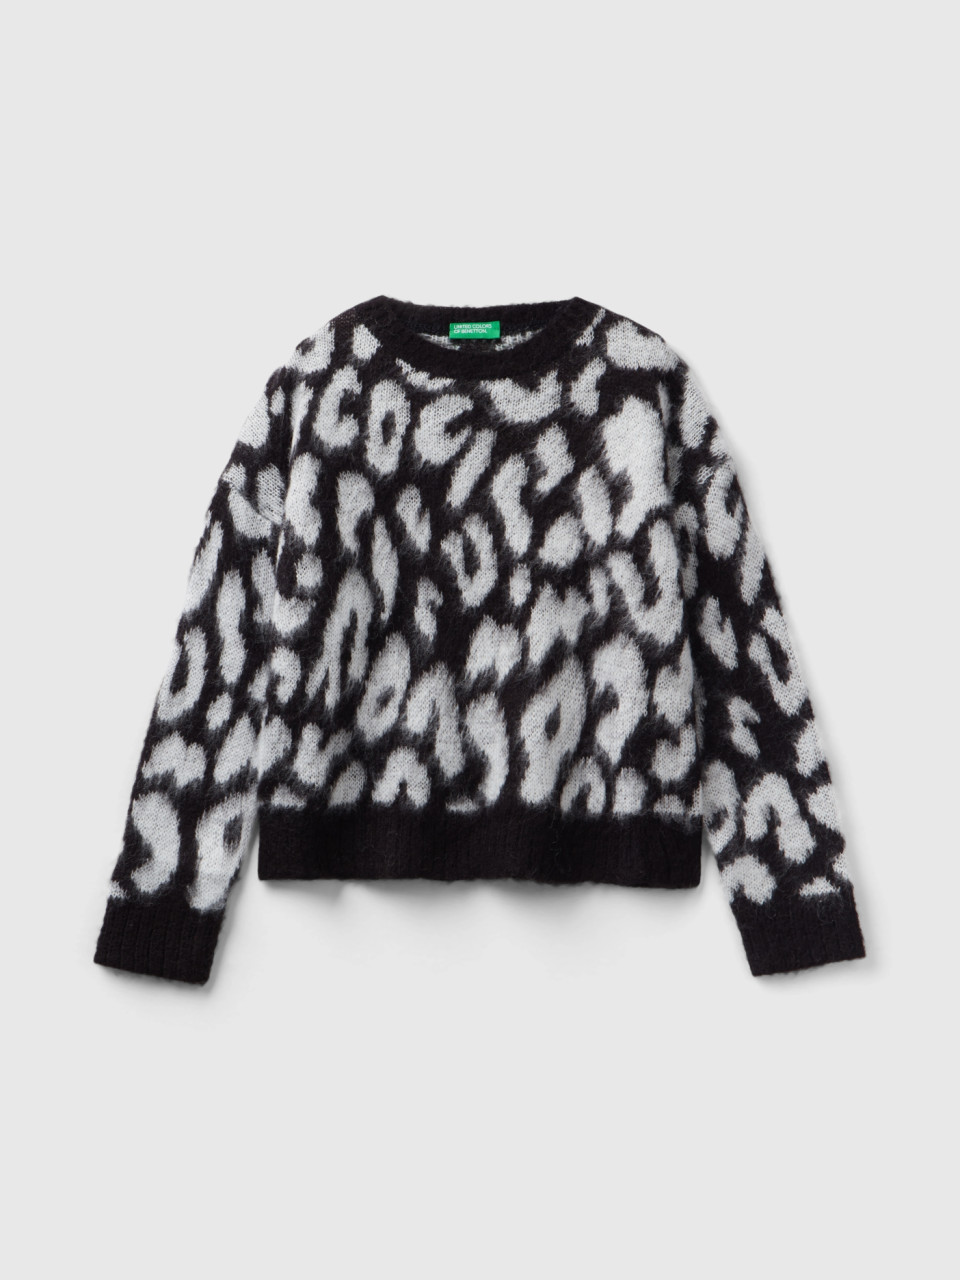 Benetton, Animal Print Sweater In Wool Blend, Multi-color, Kids